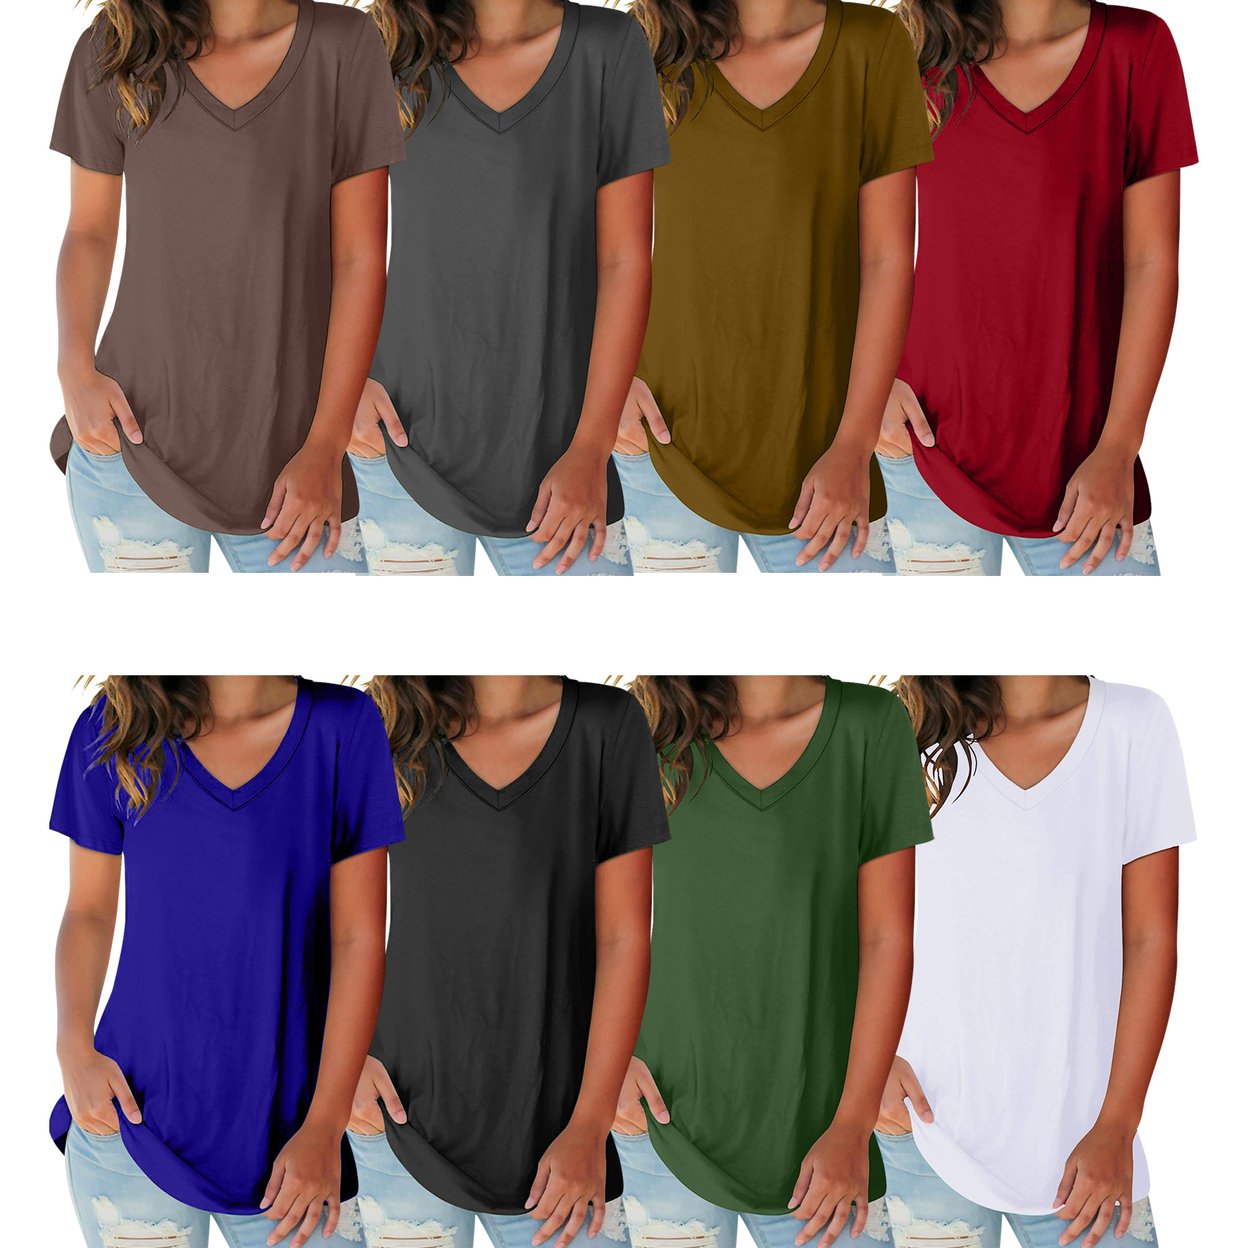 3-Pack: Women's Ultra Soft Smooth Cotton Blend Basic V-Neck Short Sleeve Shirts - Black, Navy Mustard, Medium